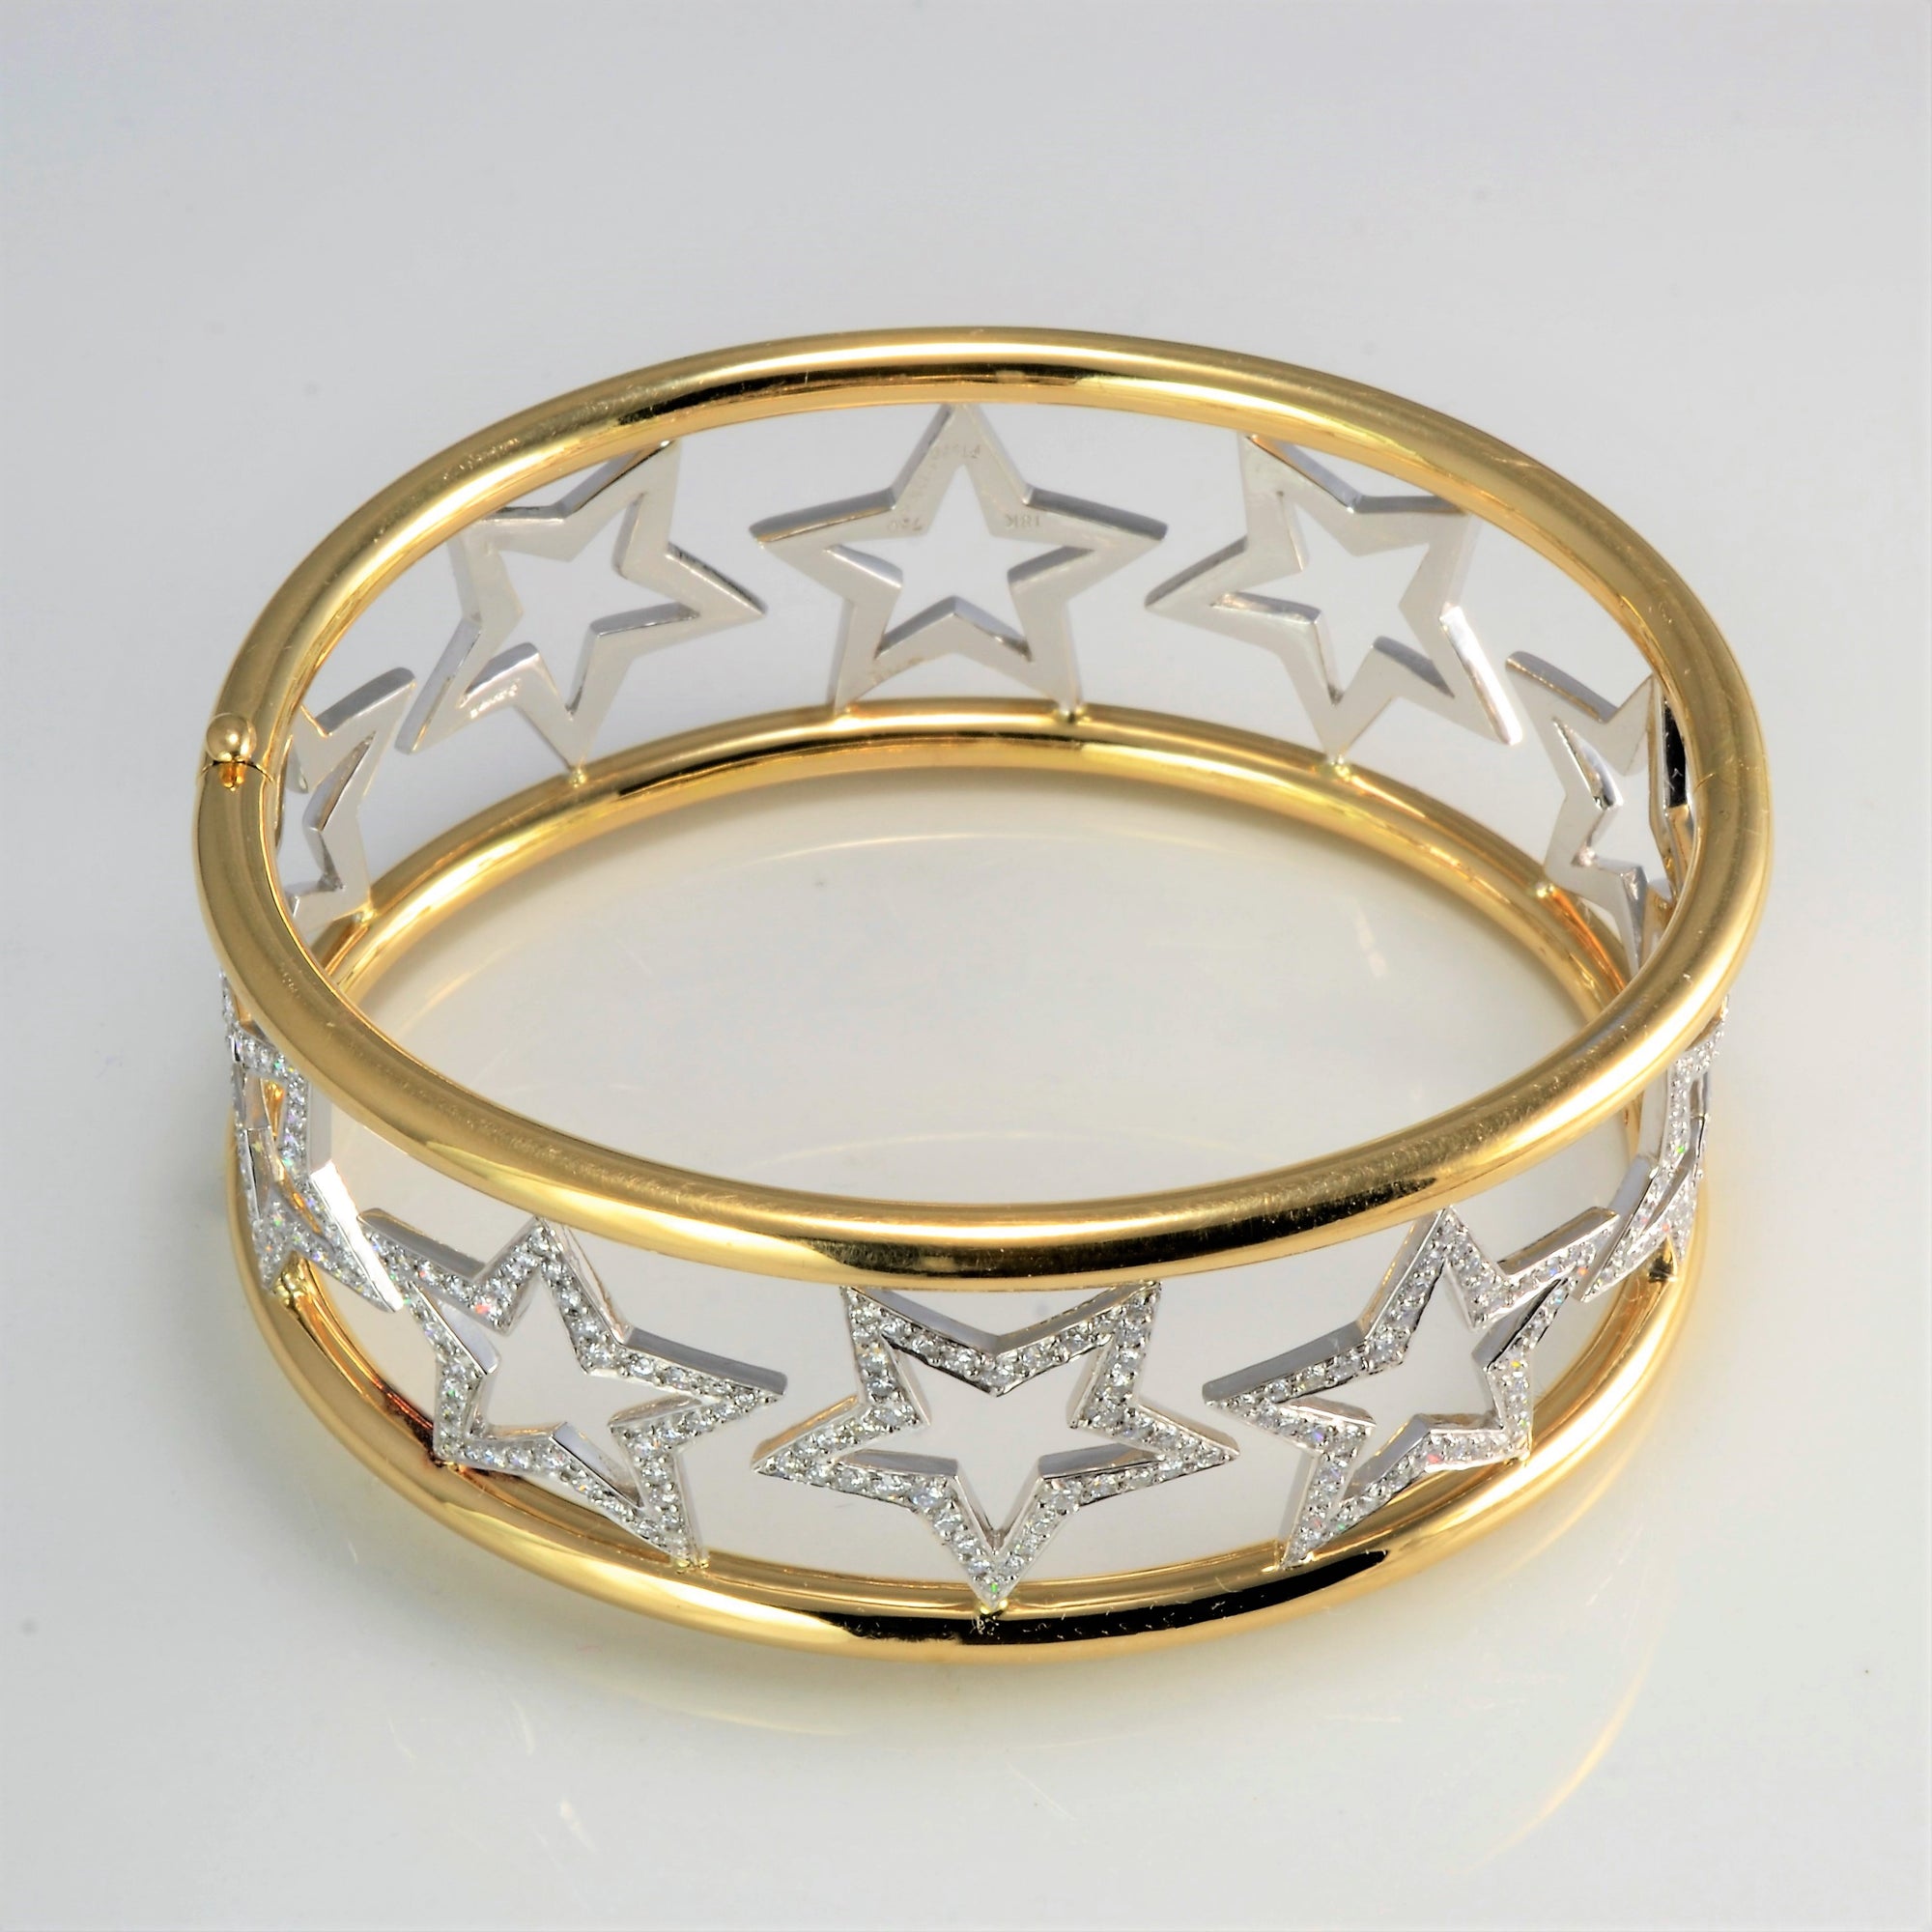 Two Tone Gold Diamond Star Design Bangle | 1.81 ctw, 7''|